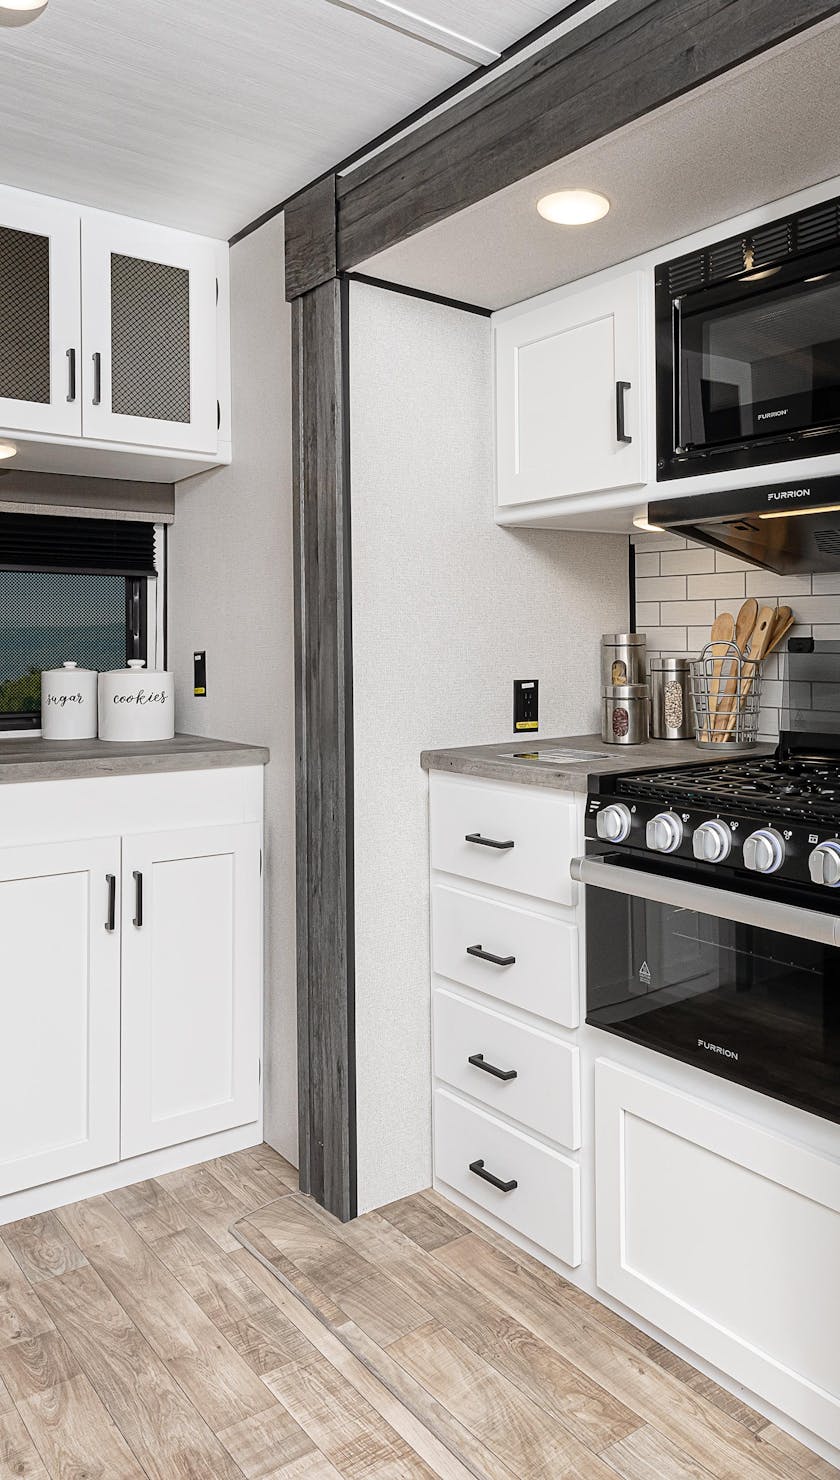 5 tips to increase RV kitchen storage space - RV Travel